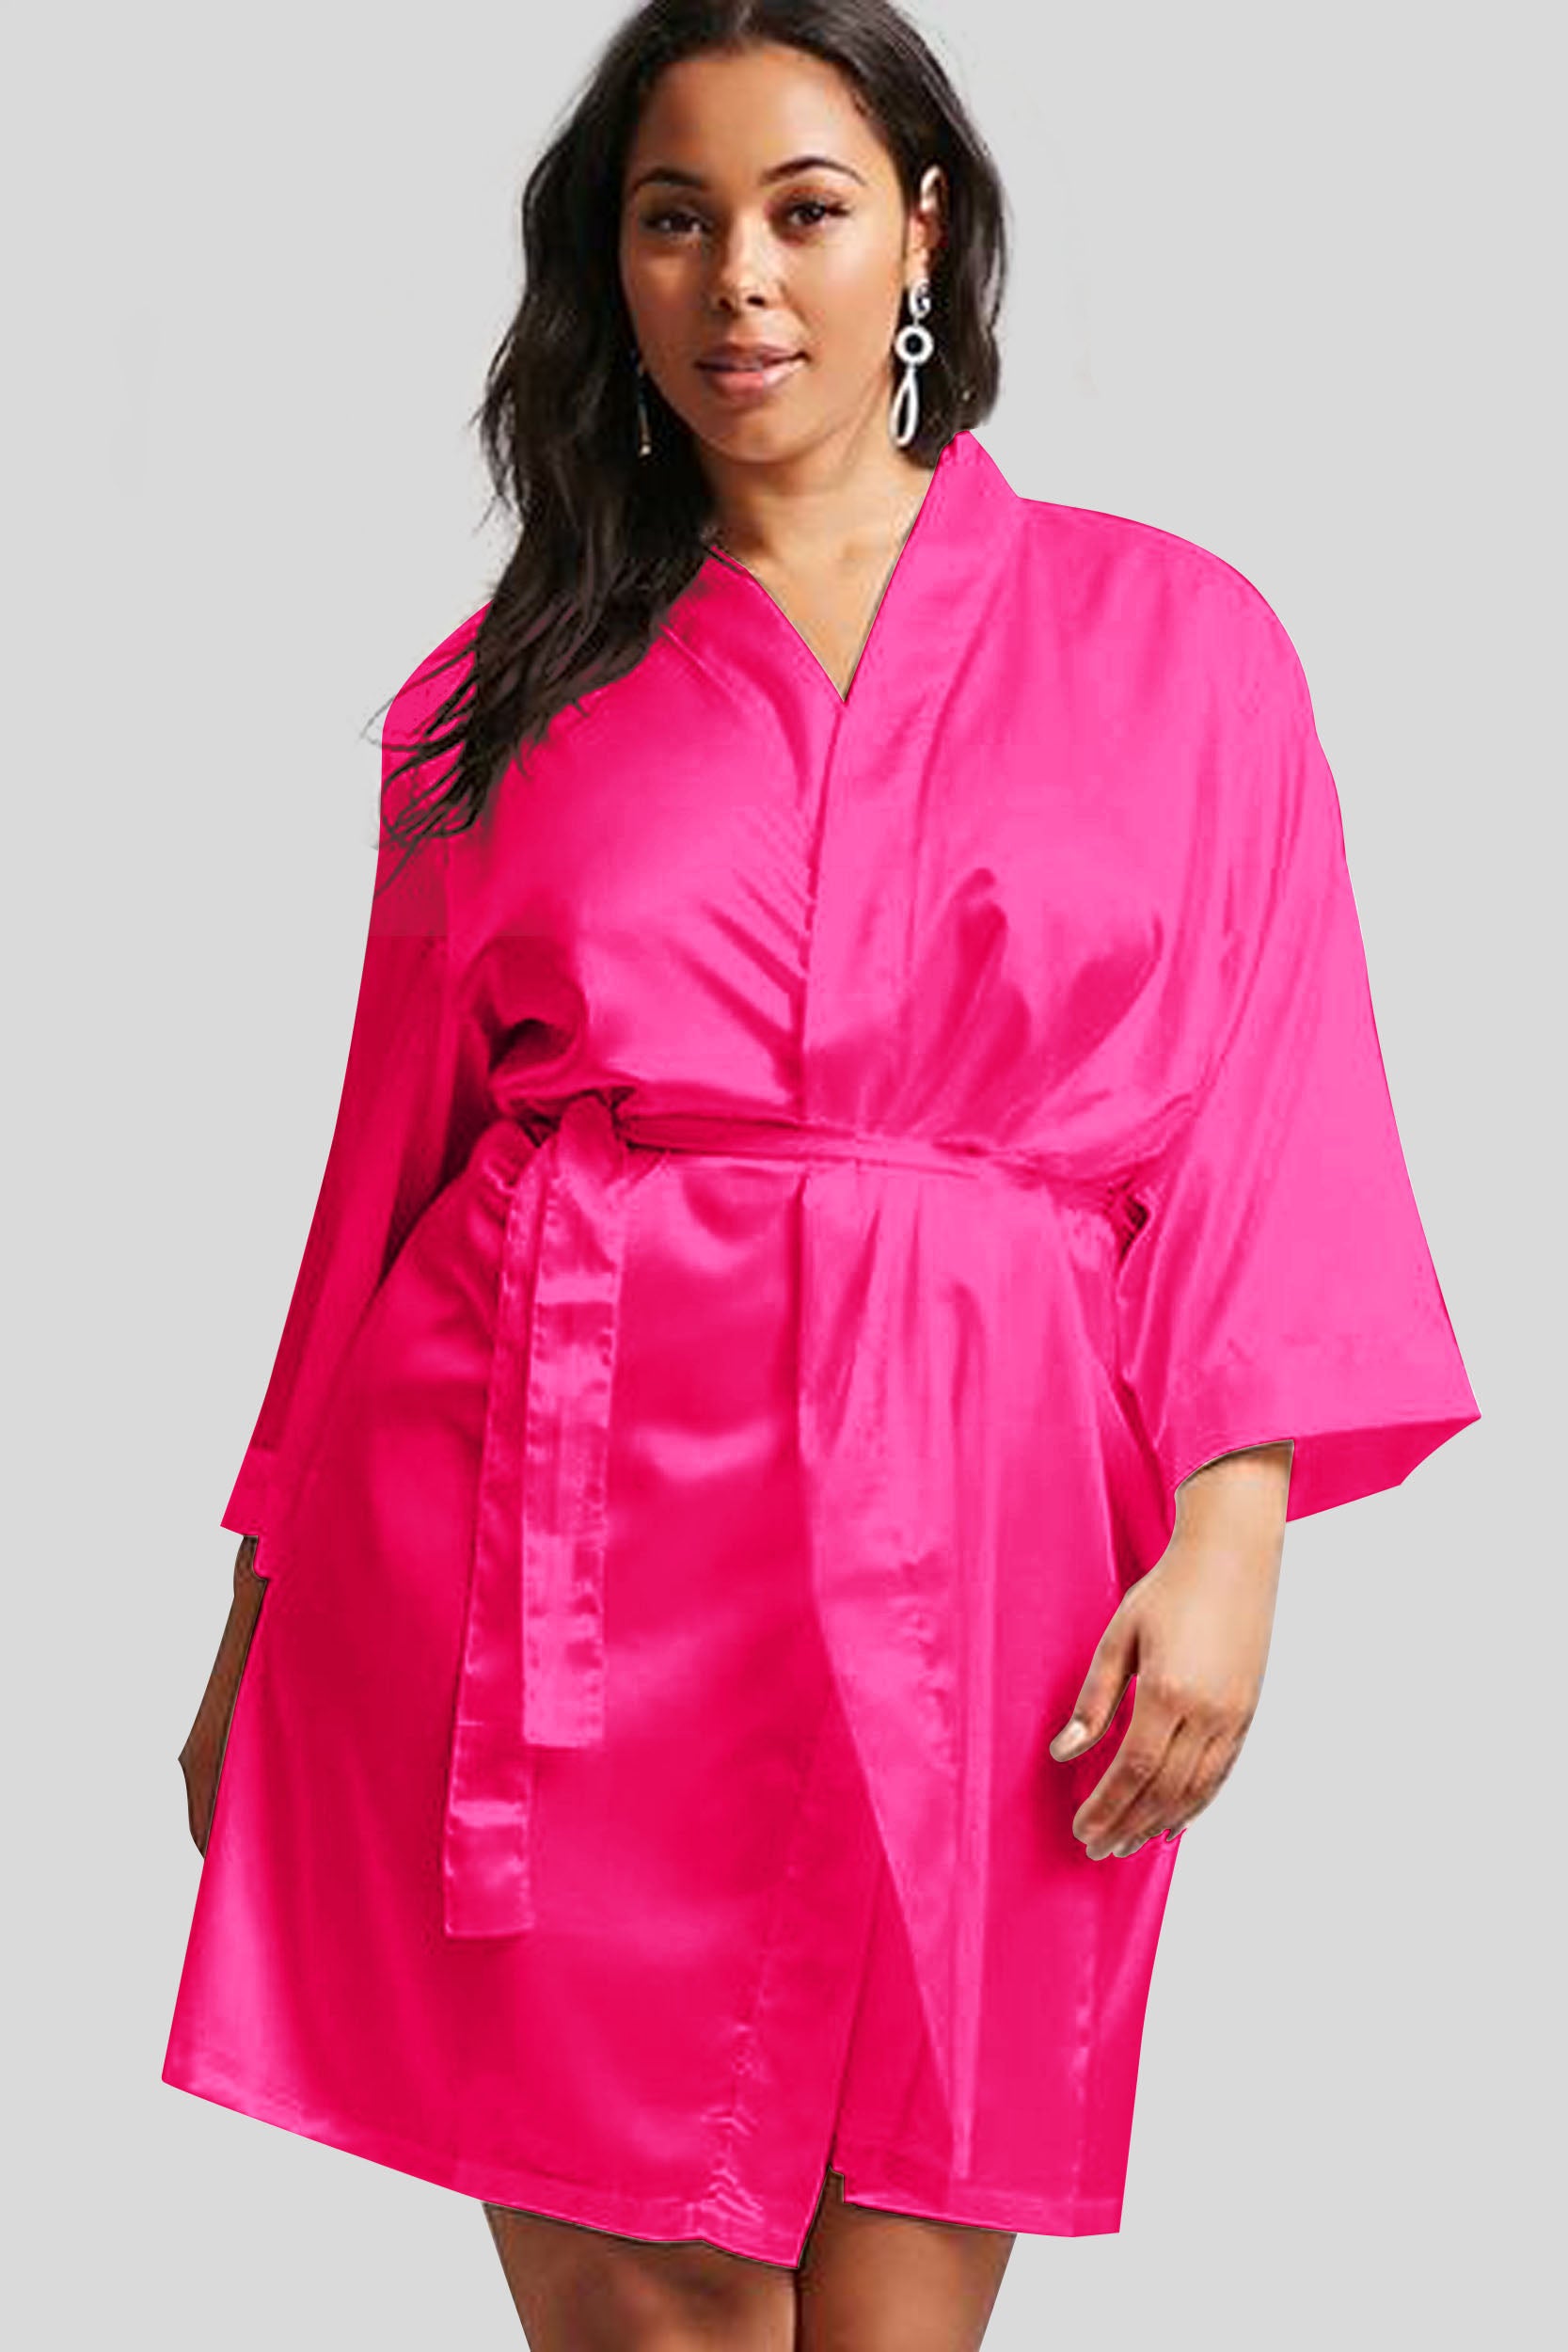 Hot Pink Satin Kimono Robe